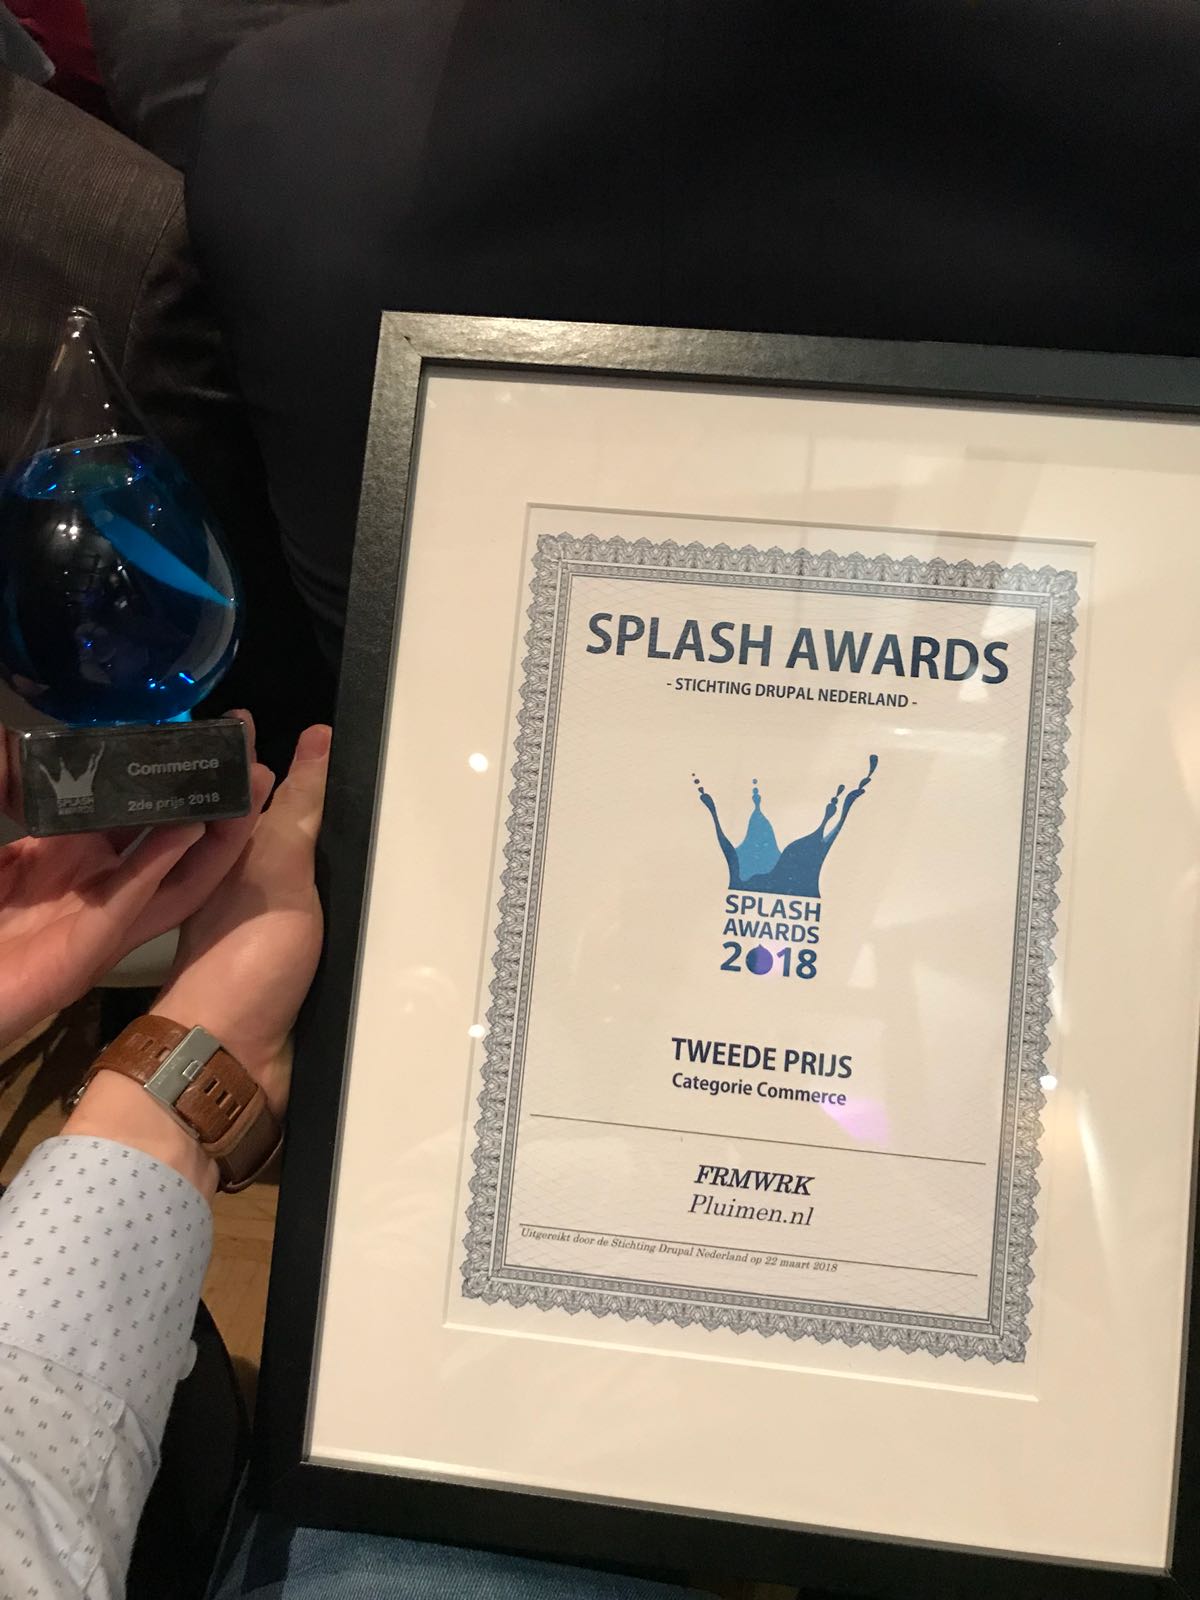 Splash award certificate for Drupal Commerce site